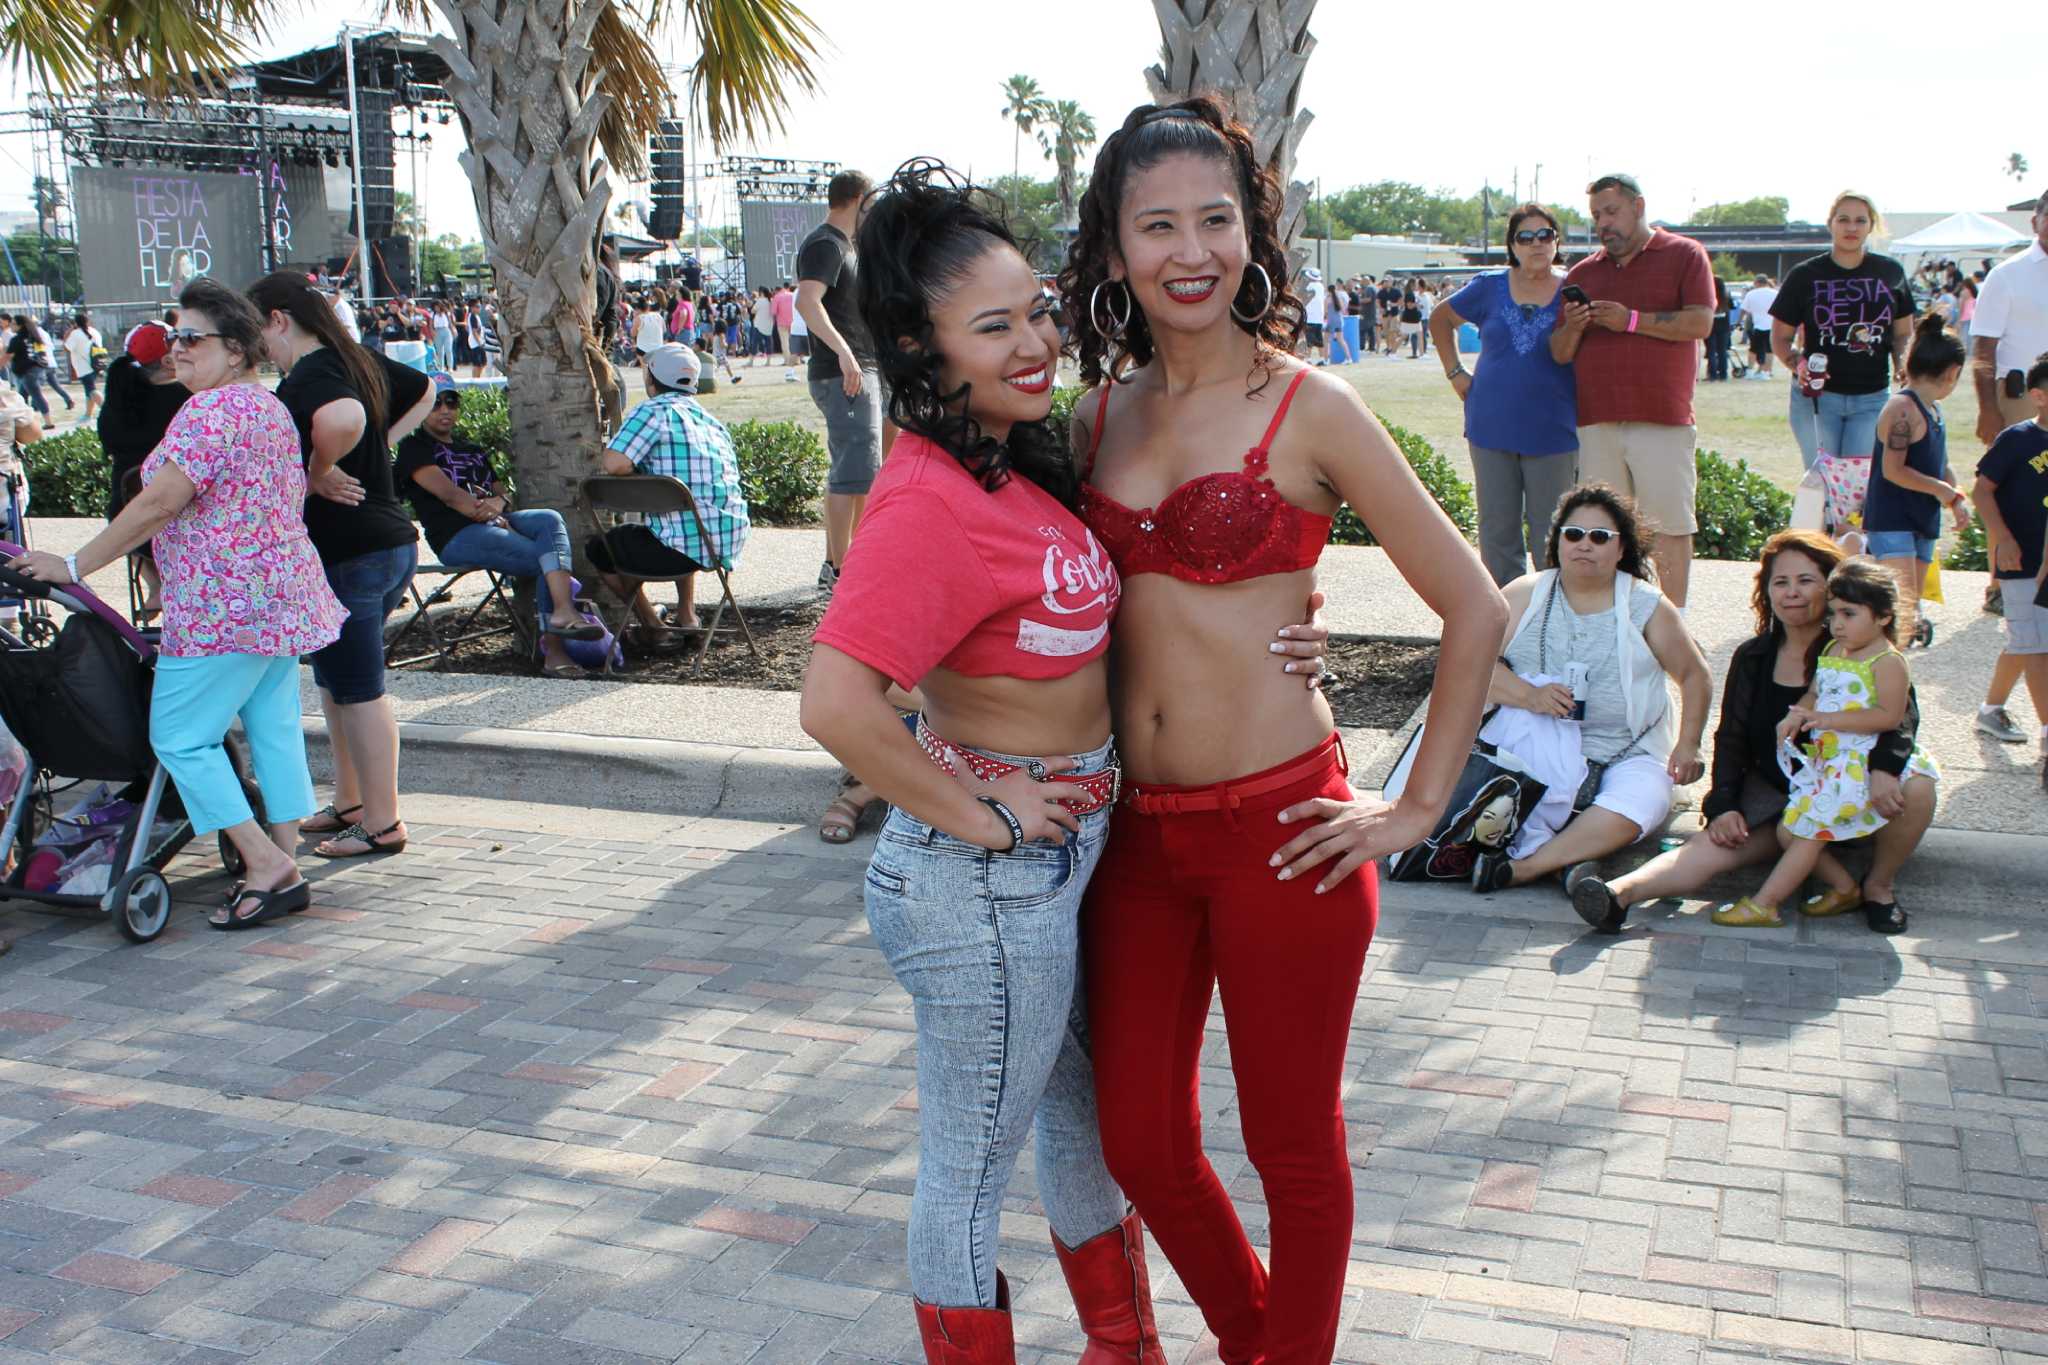 Selena impersonator wows fans at Fiesta de la Flor